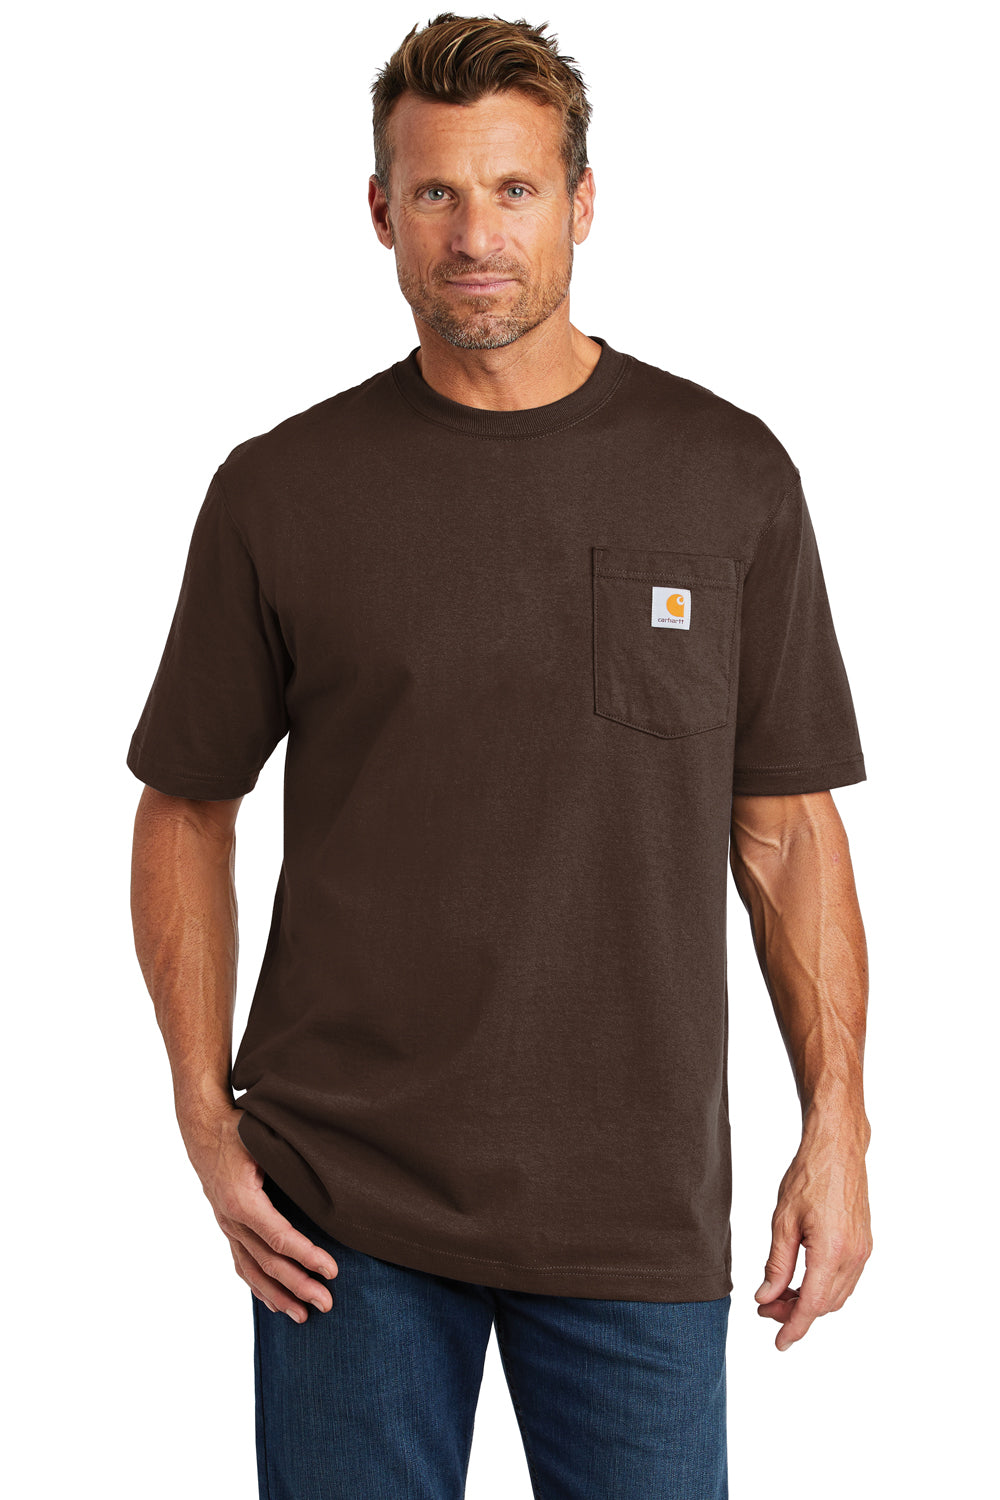 Carhartt CTK87 Mens Workwear Short Sleeve Crewneck T-Shirt w/ Pocket Dark Brown Front